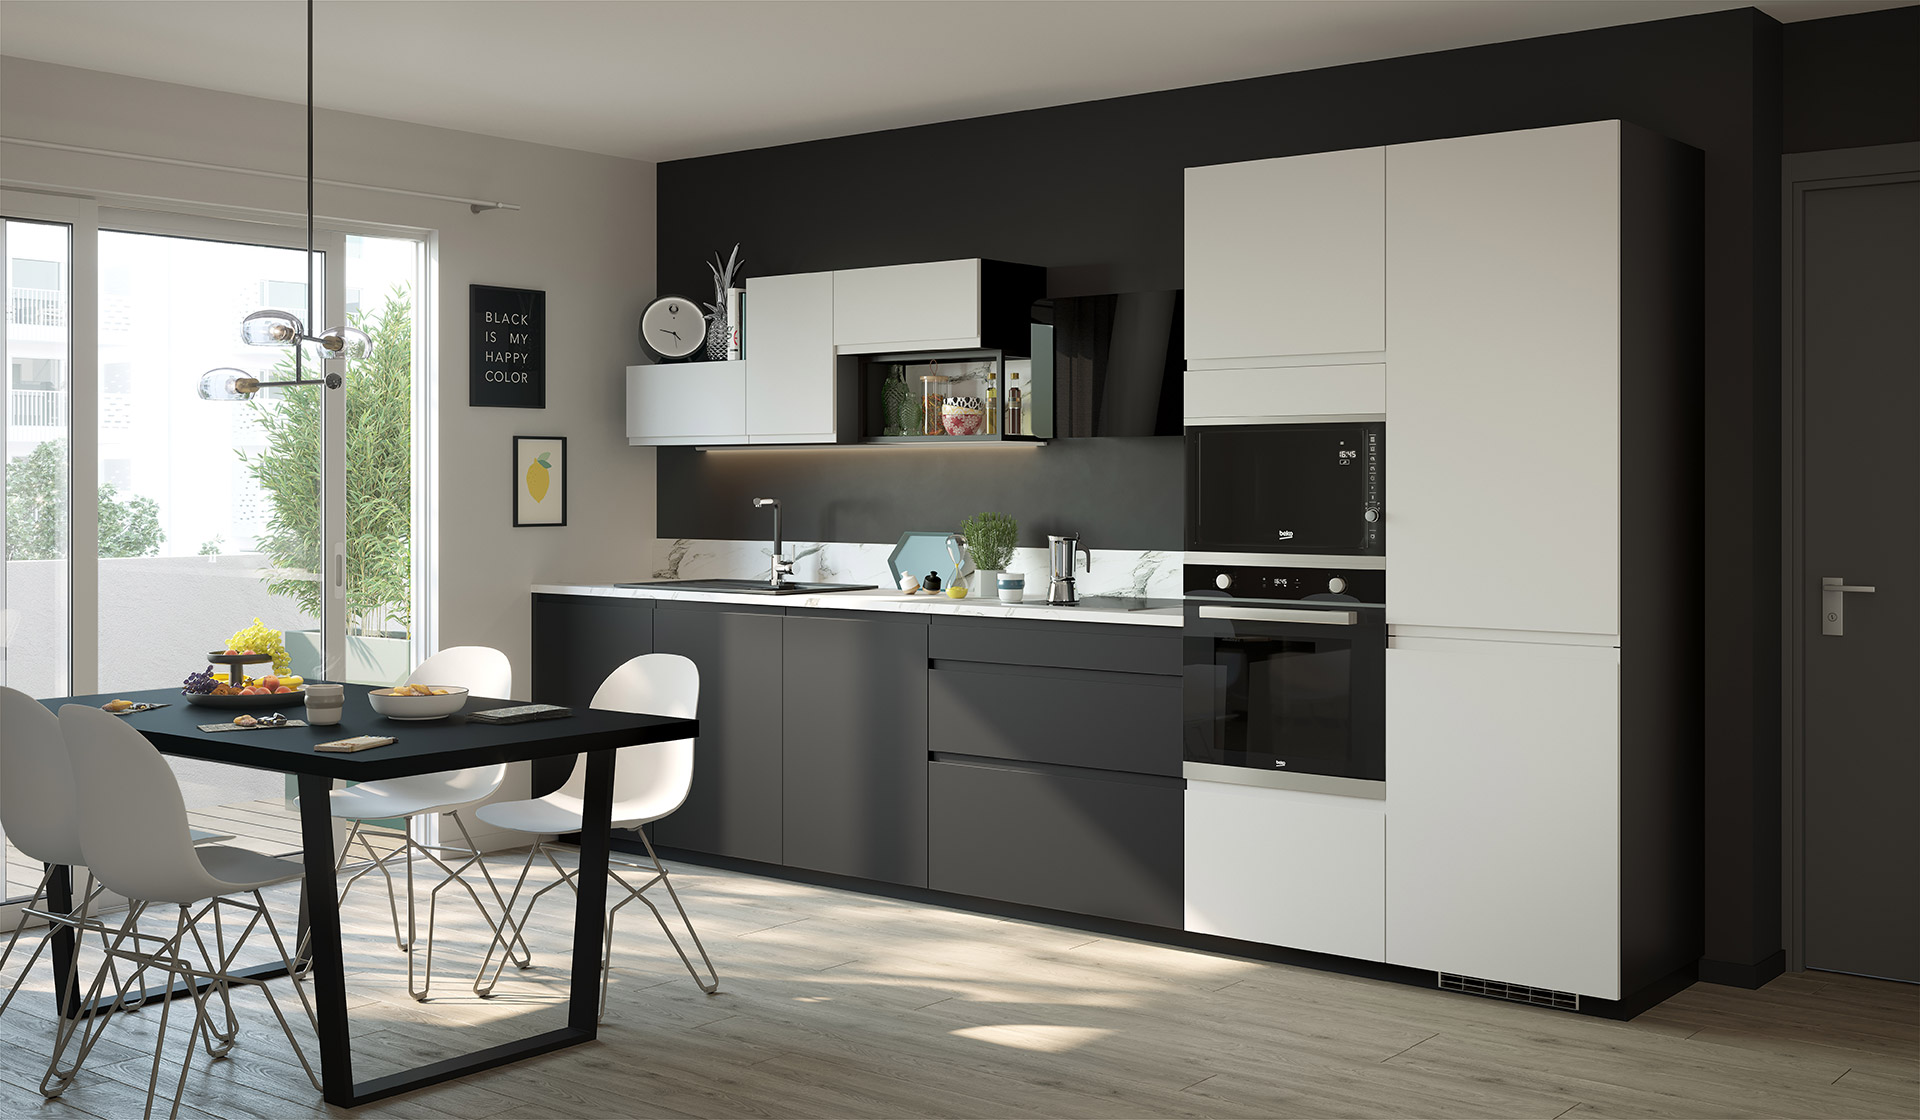 3D interior visualization of a kitchen set